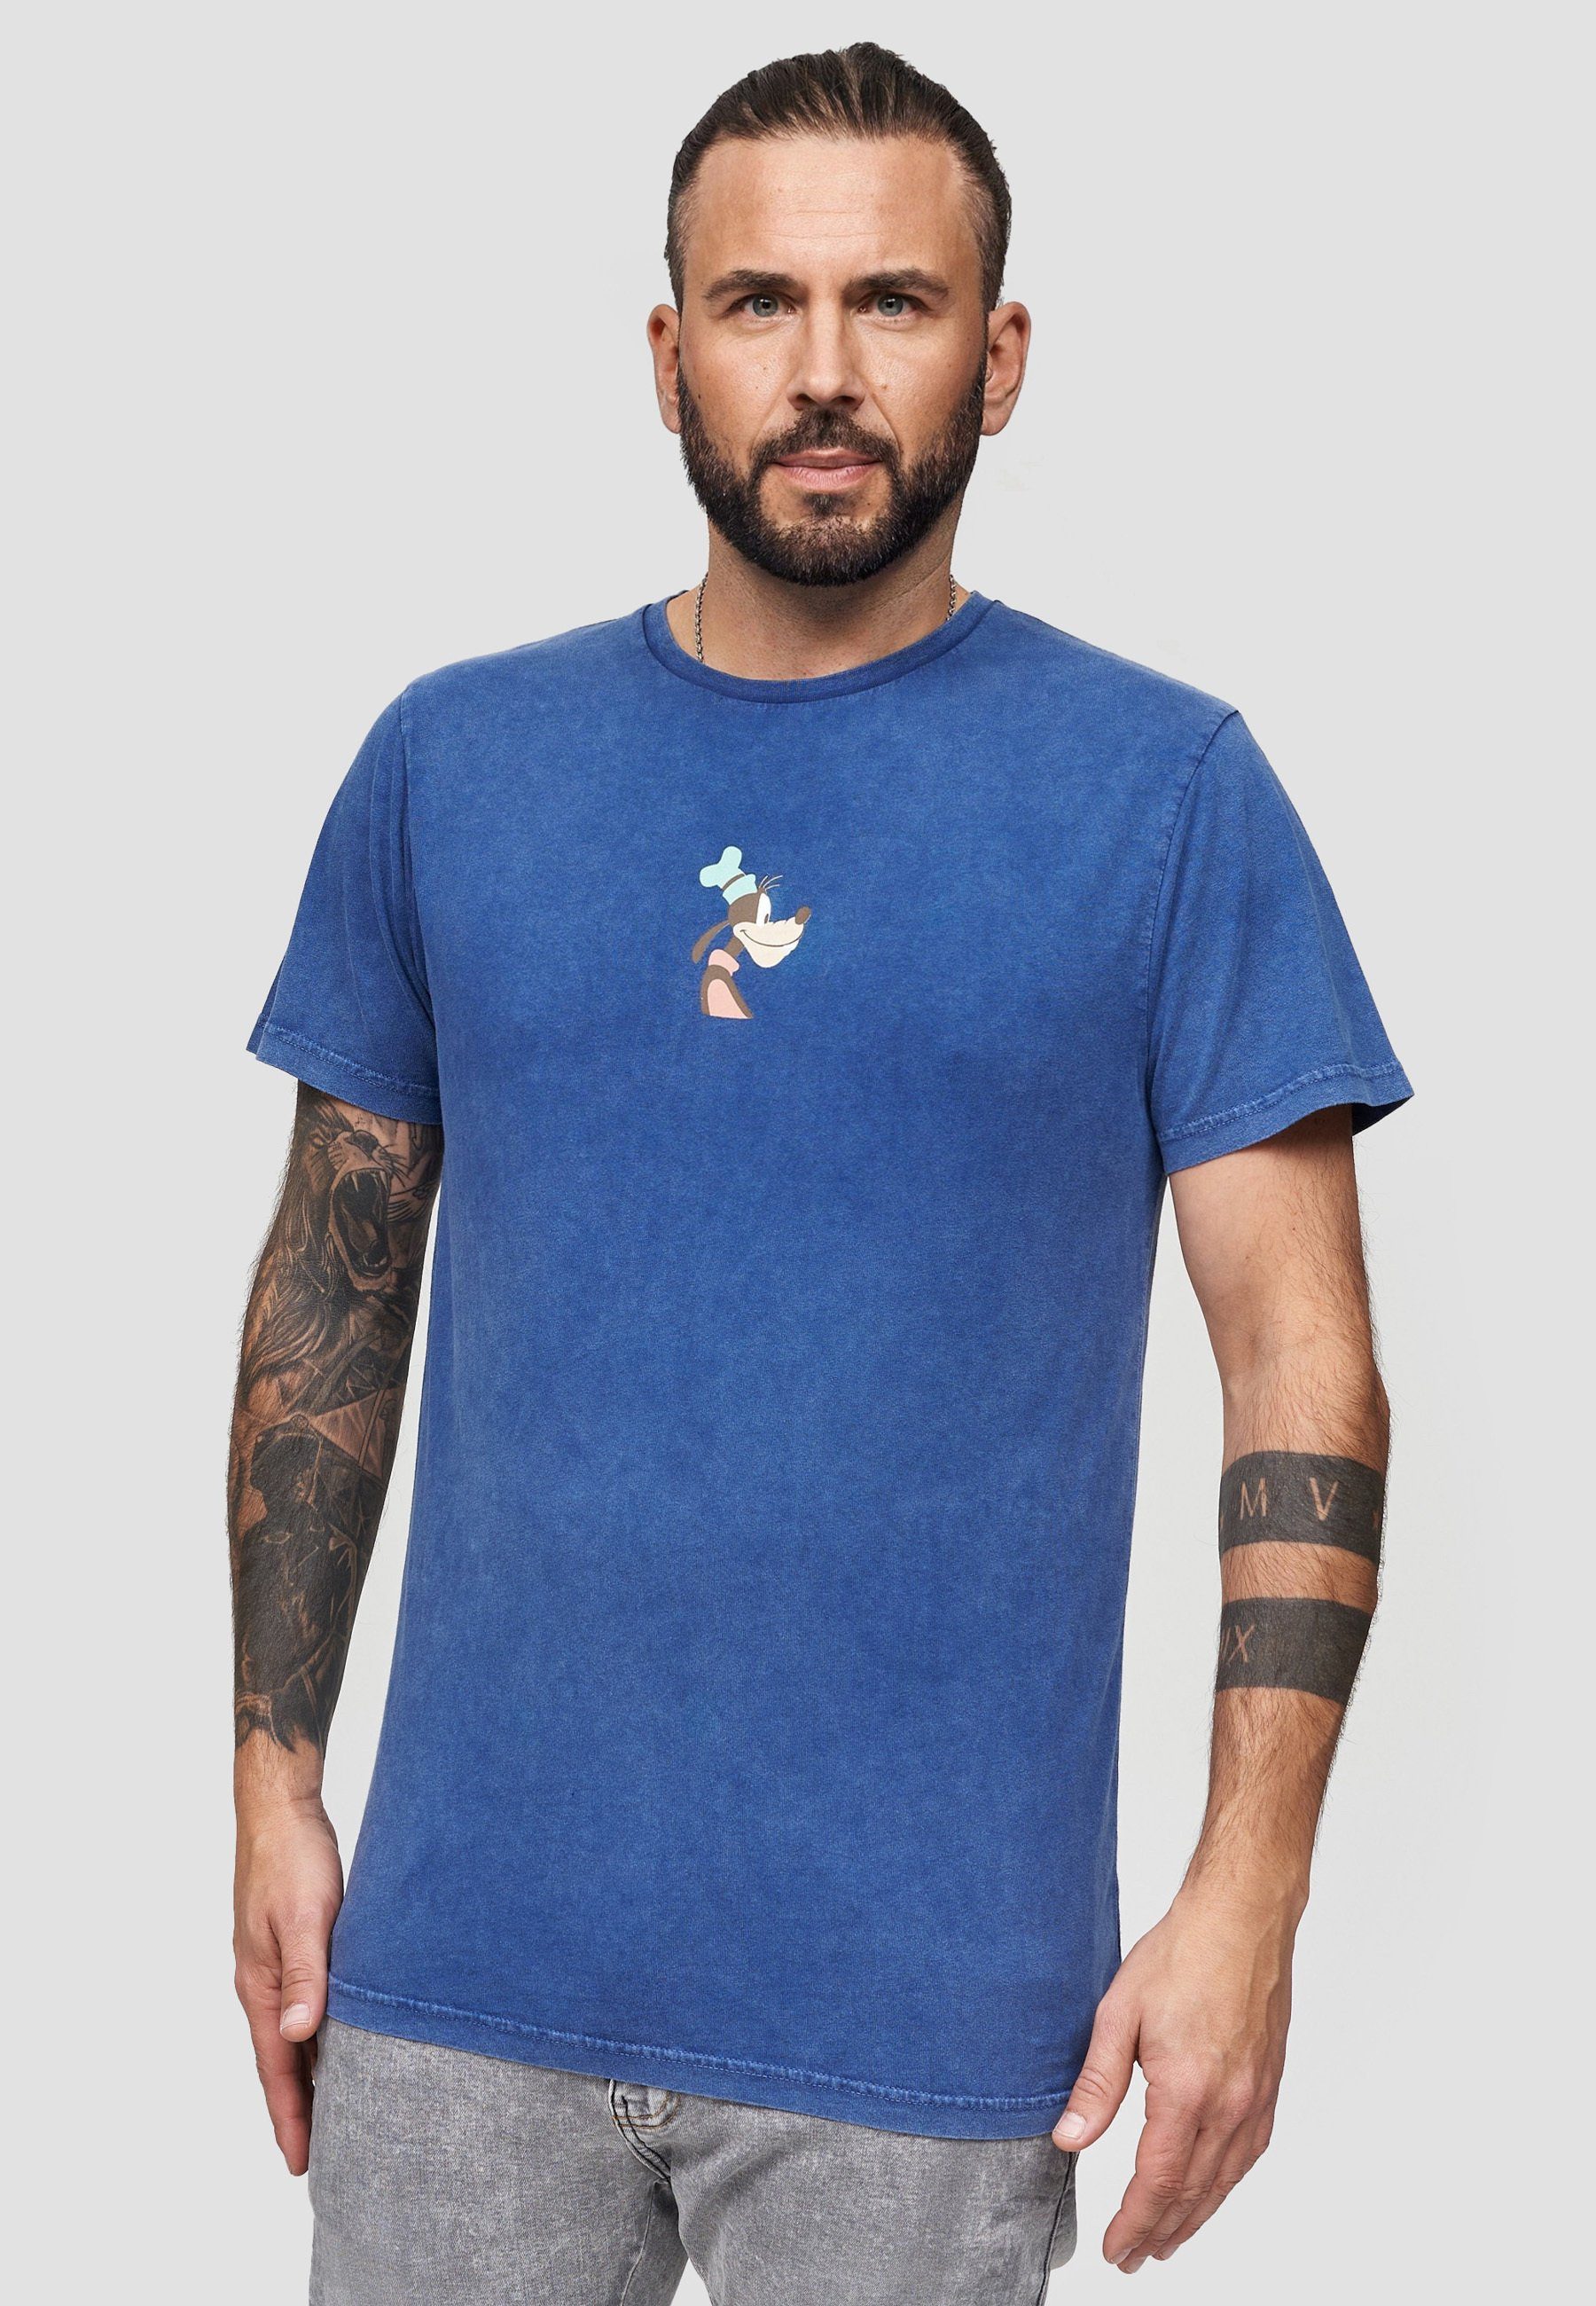 Bio-Baumwolle zertifizierte Recovered GOTS Blau T-Shirt Disney Goofy Side Profile